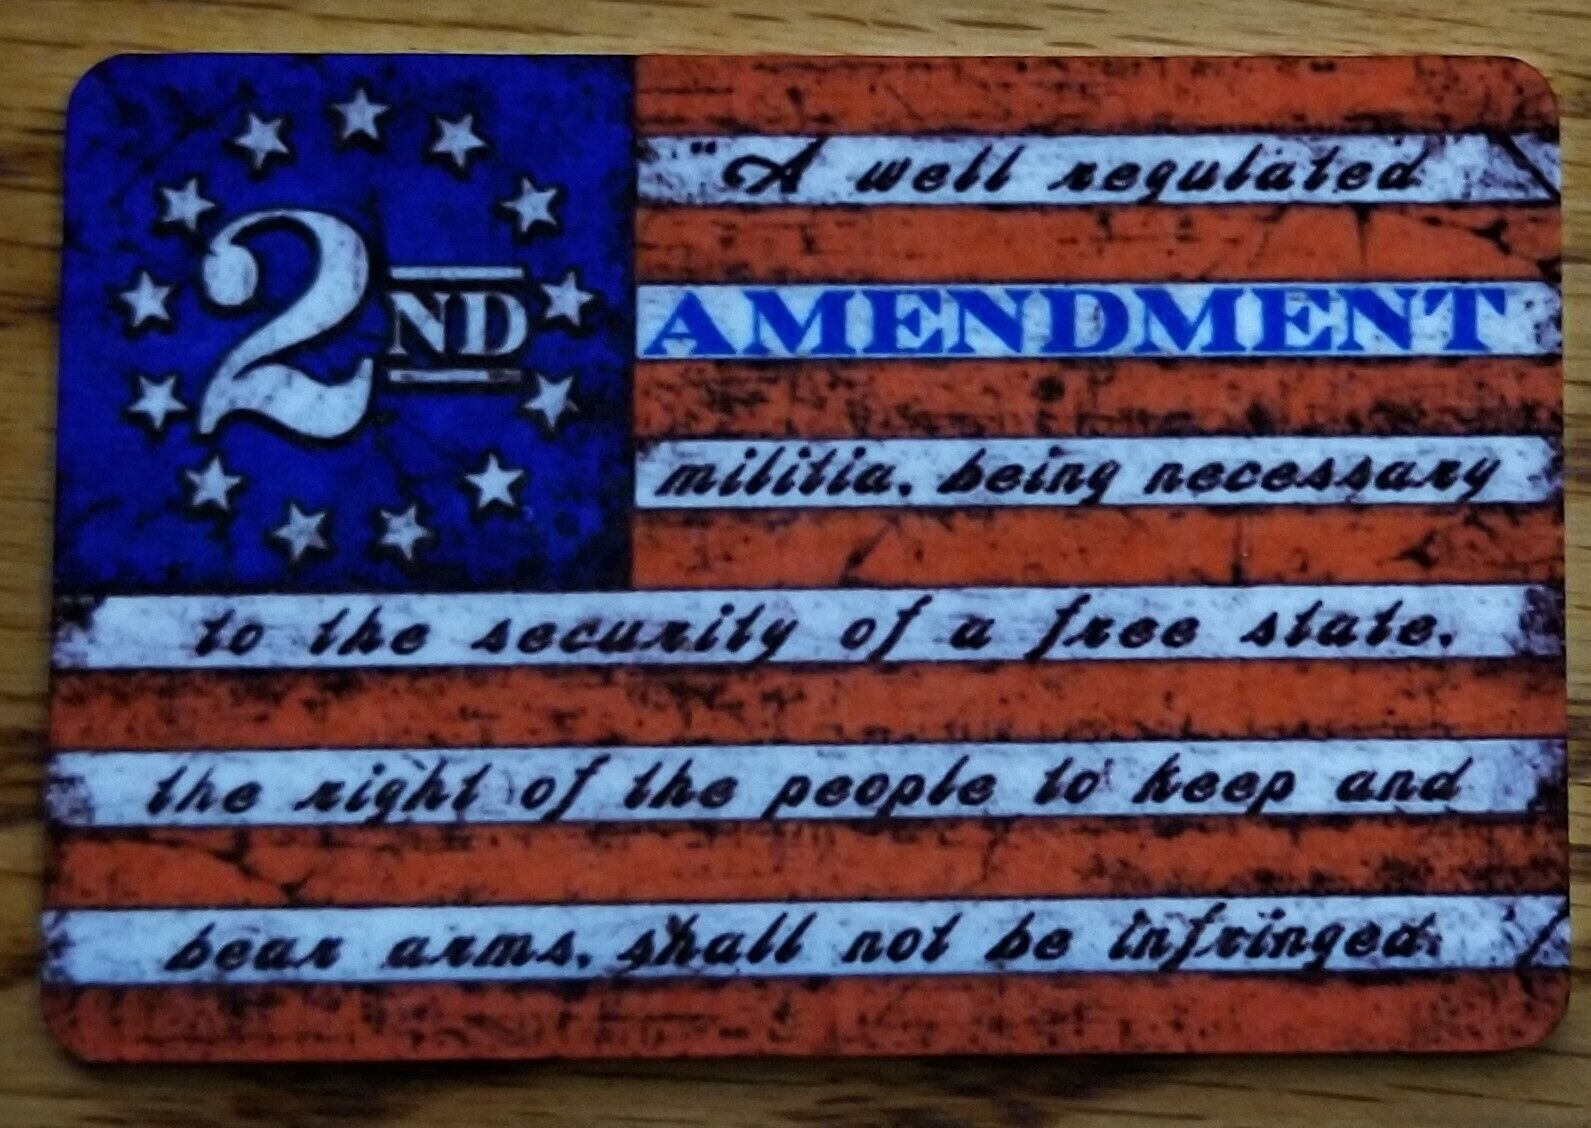 2nd Amendment flag 2A Constitution Bill of Rights 2x3 refrigerator fridge magnet